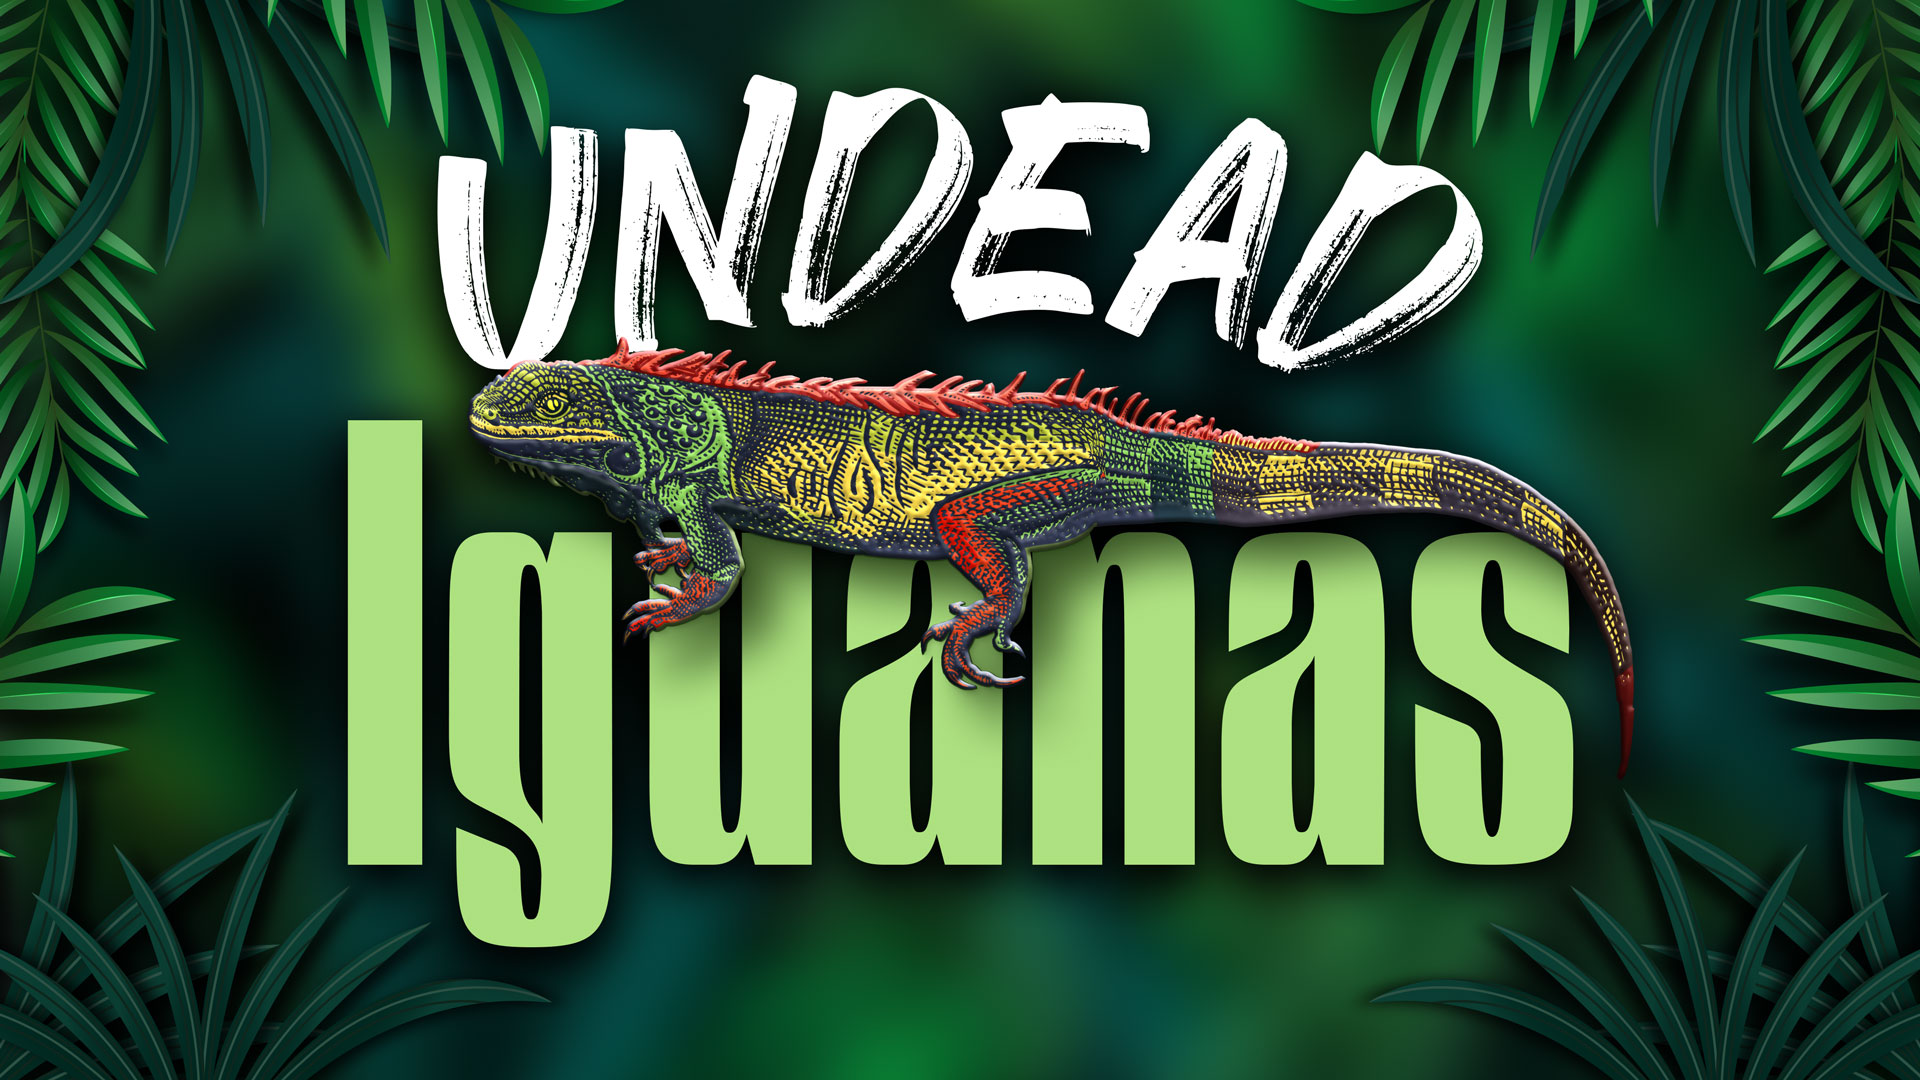   Undead Iguanas